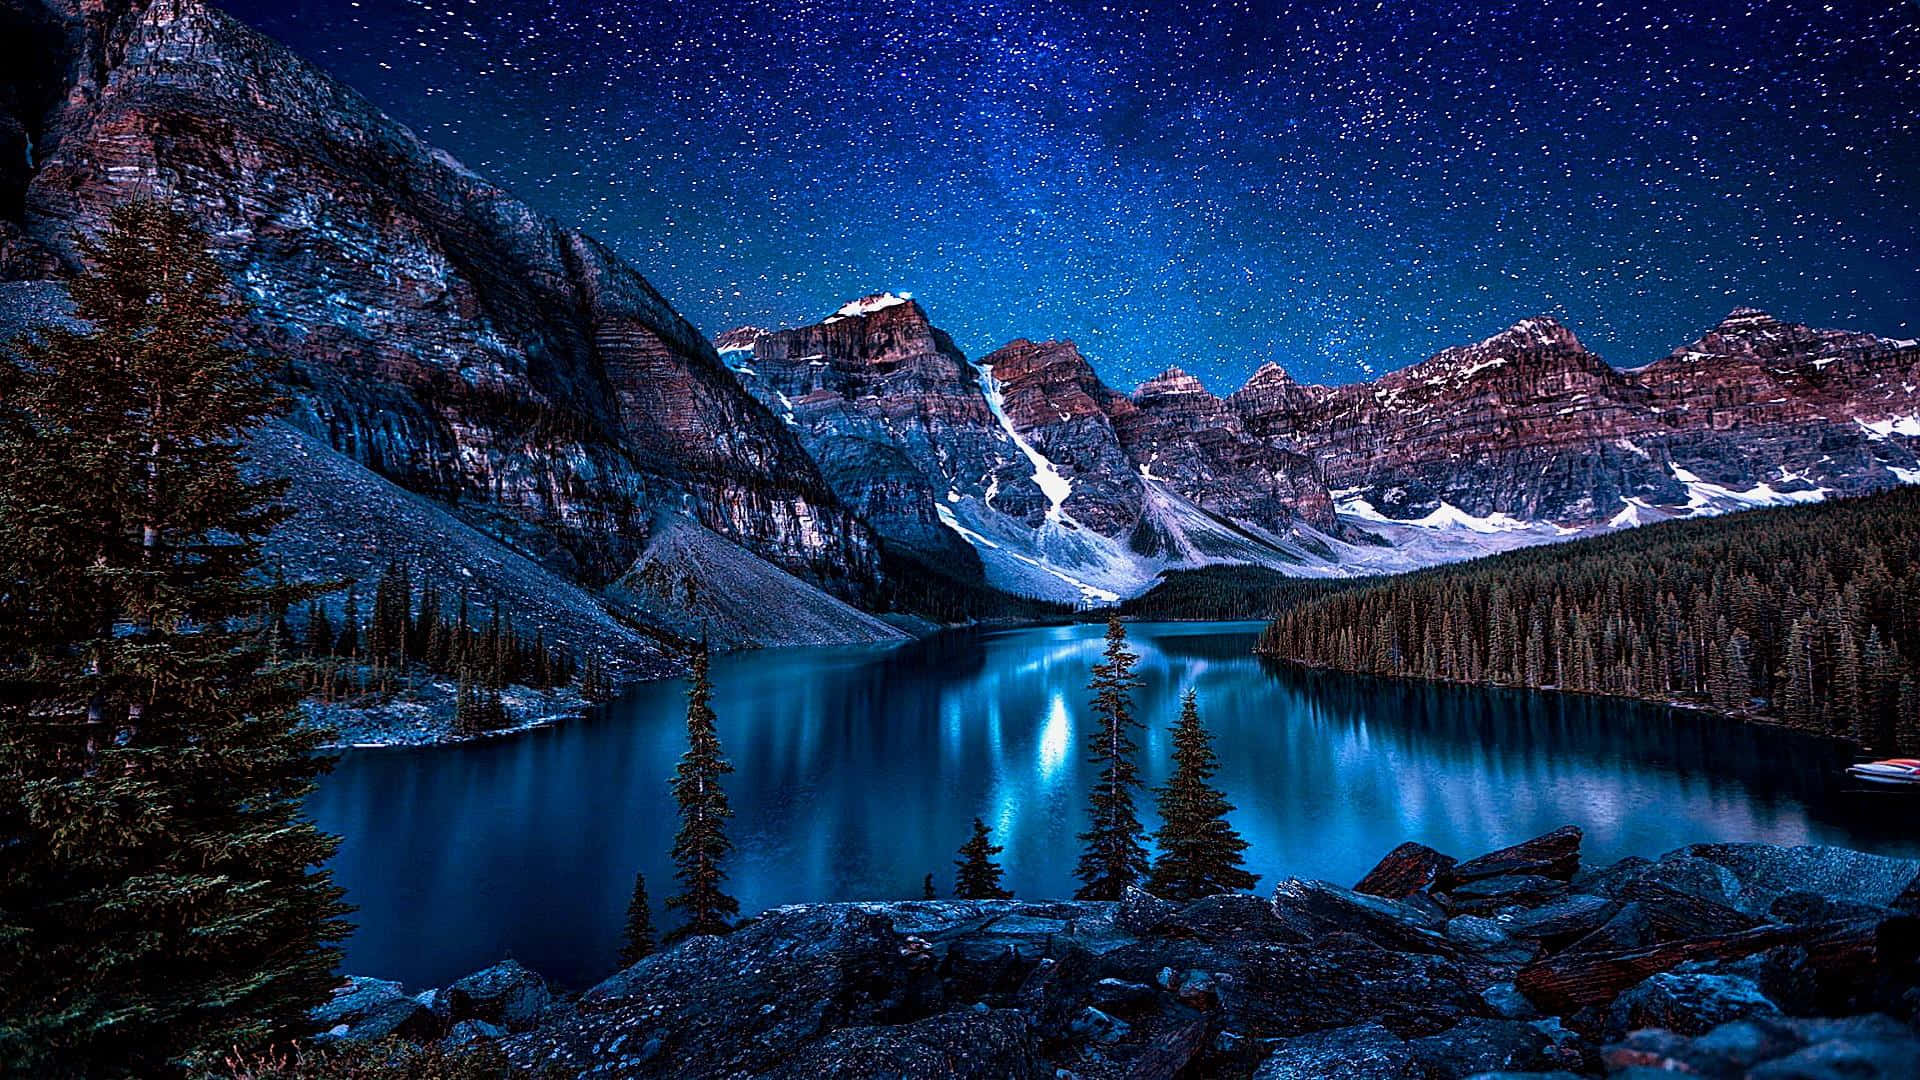 Canada Background